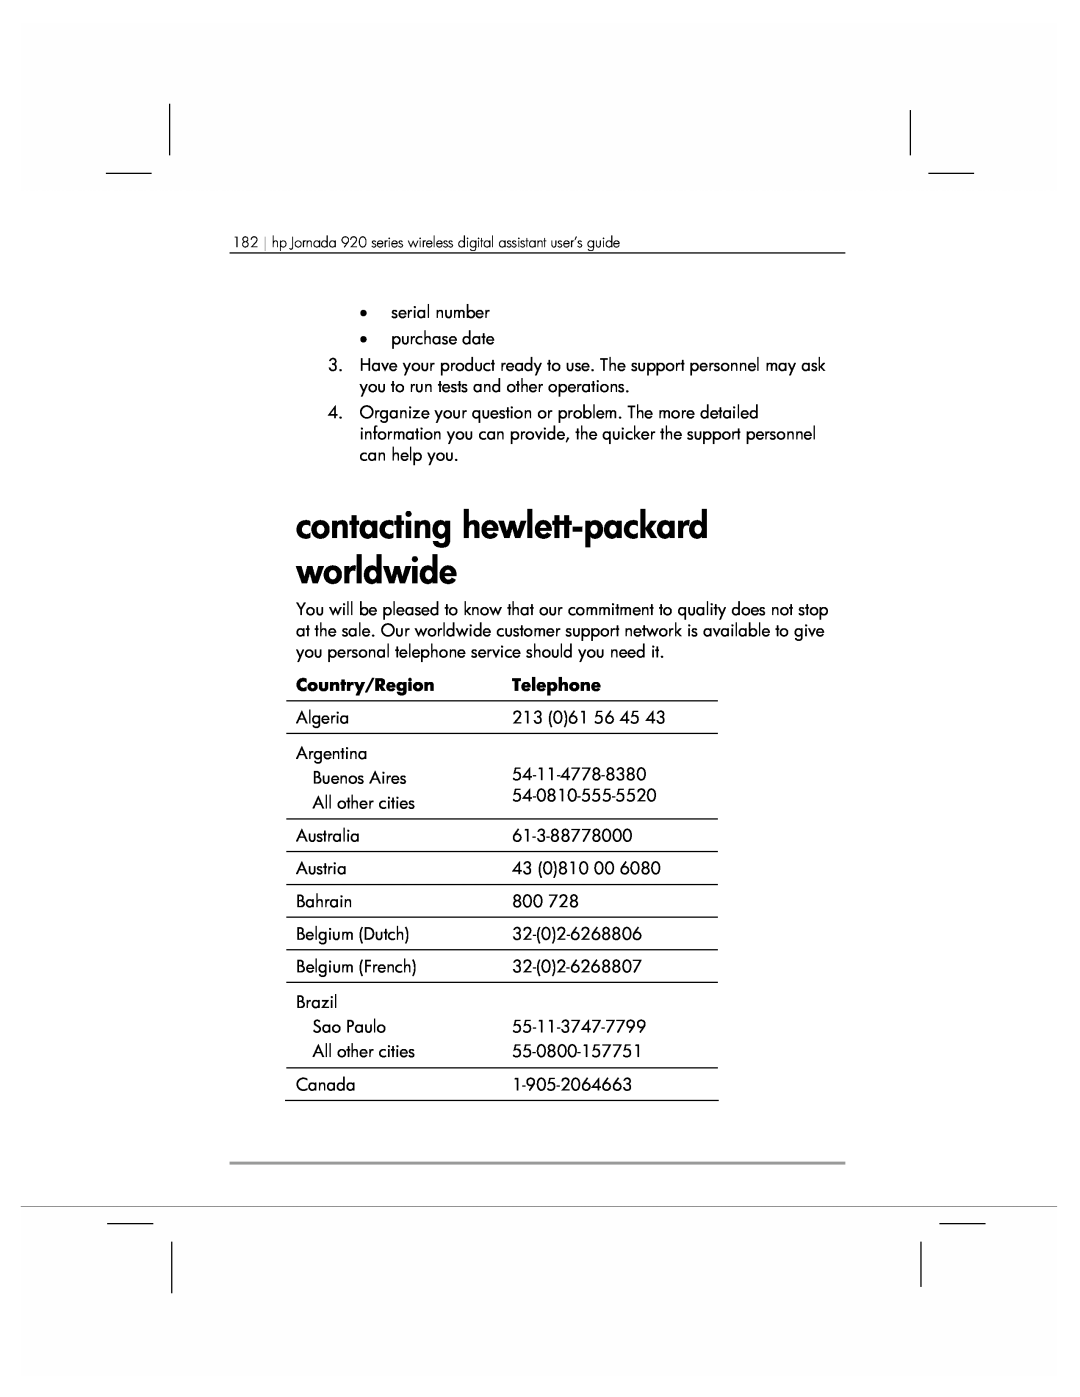 HP 920 manual contacting hewlett-packard worldwide, Country/Region, Telephone 